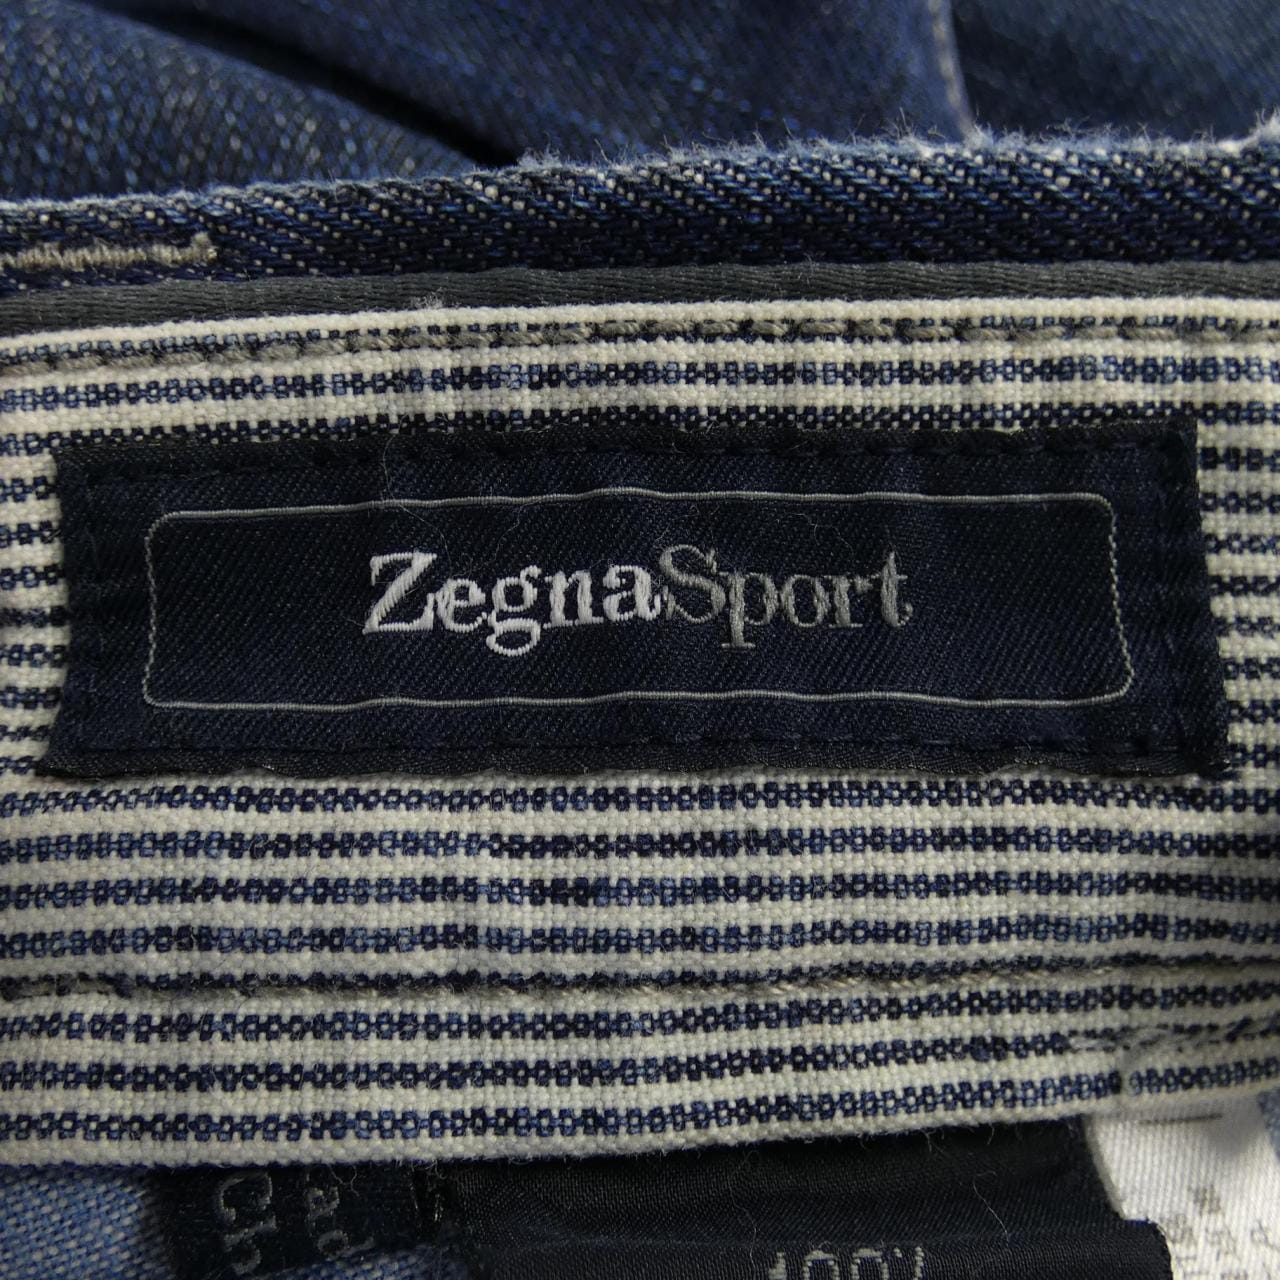 Zegna sports ZEGNA SPORT jeans